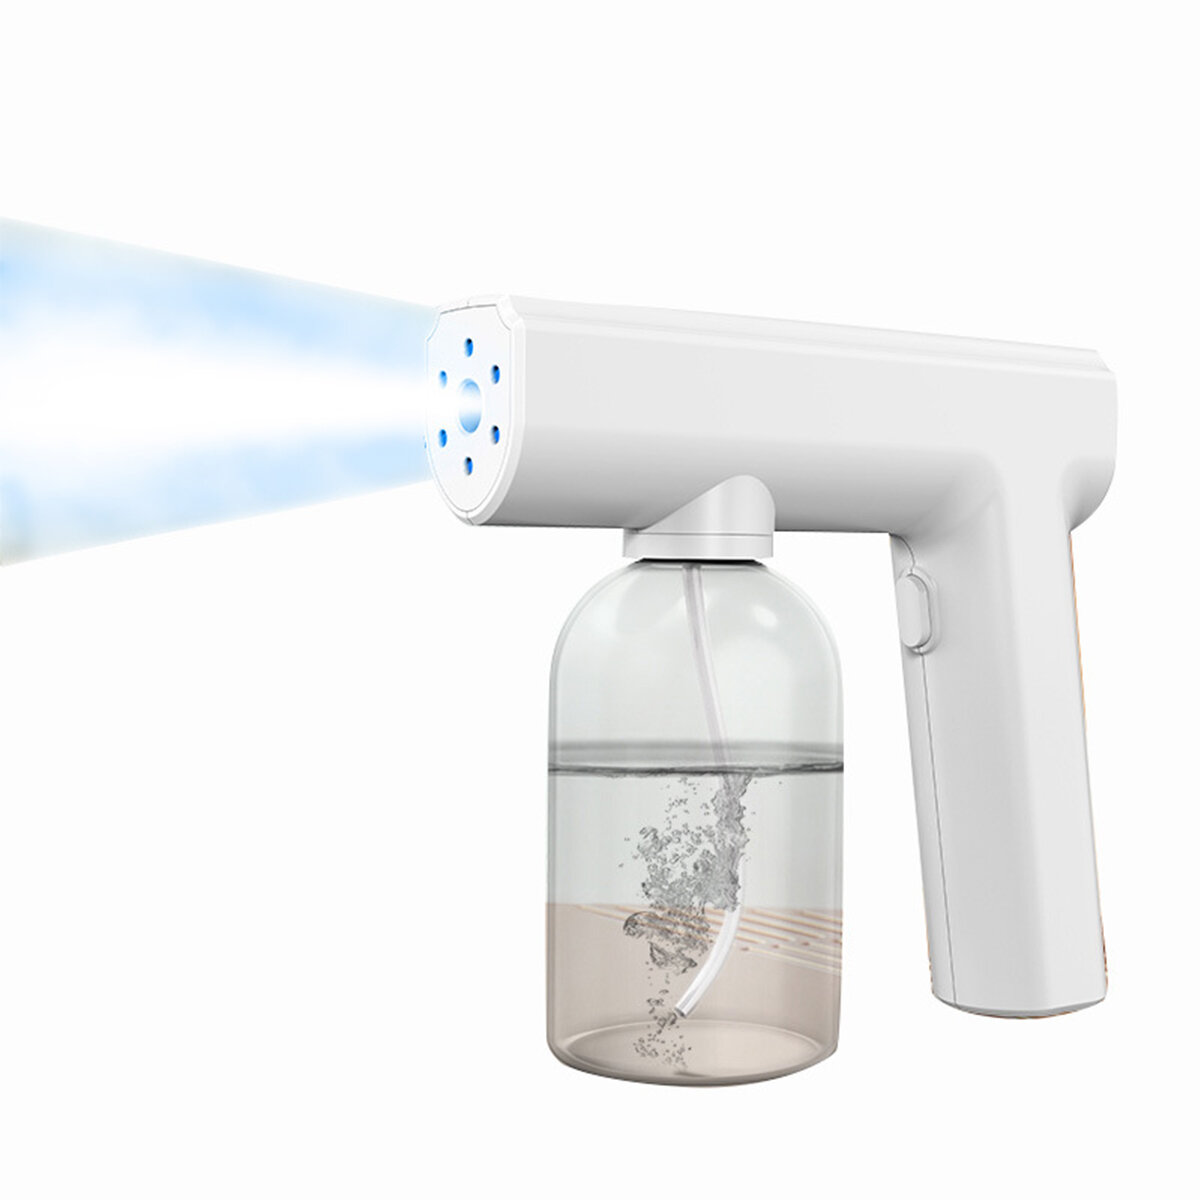 Image of 300ml USB Blue Light Sprayer Hosehold Electric Sprayer Tool Portable Nano Disinfectant Spray Atomizer